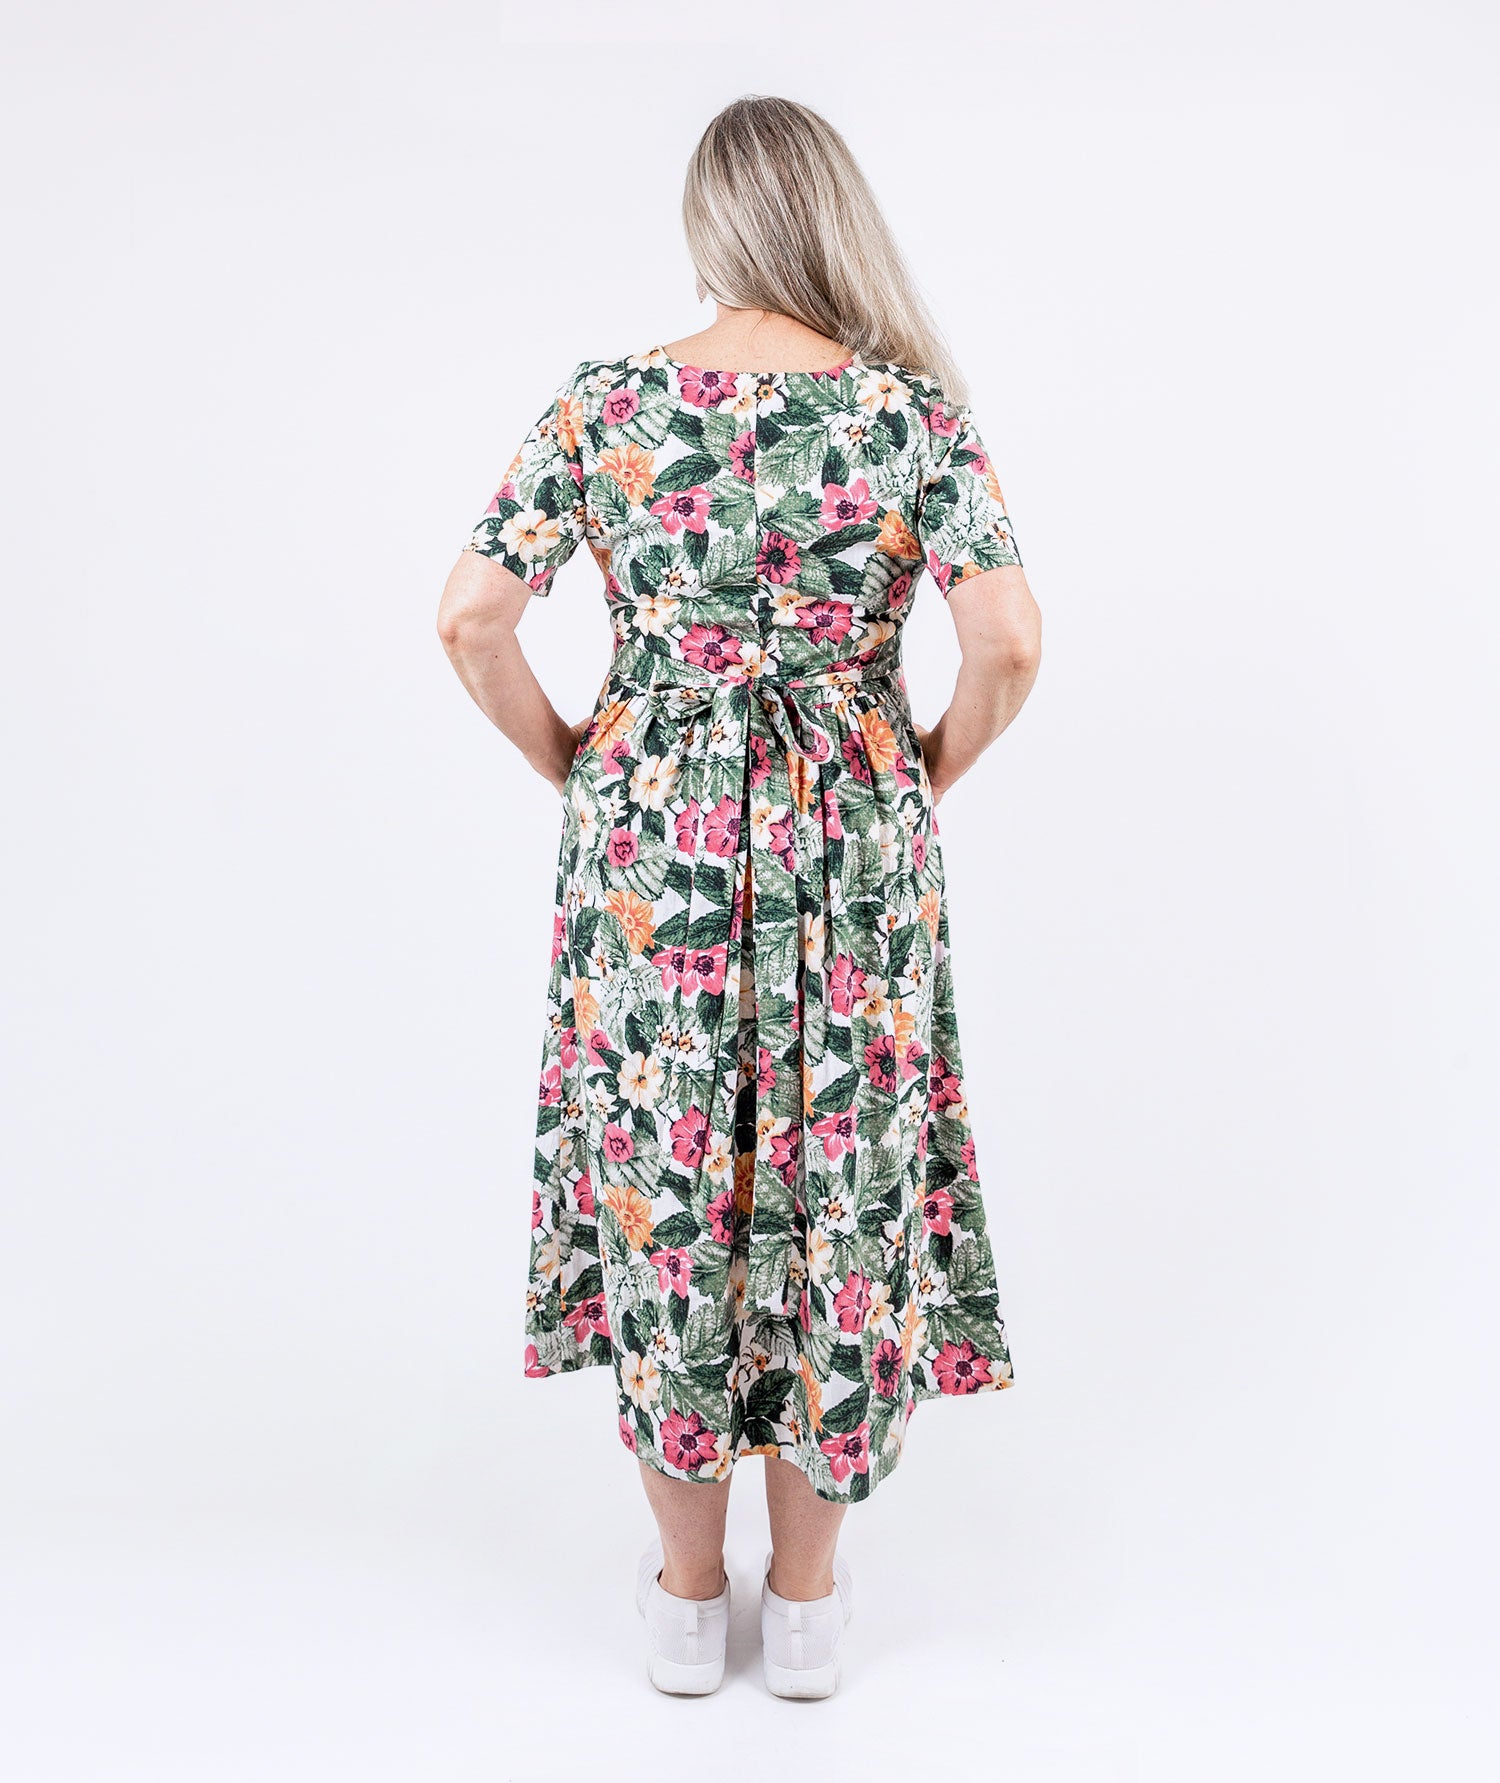 Leaf Print Dress - Cream